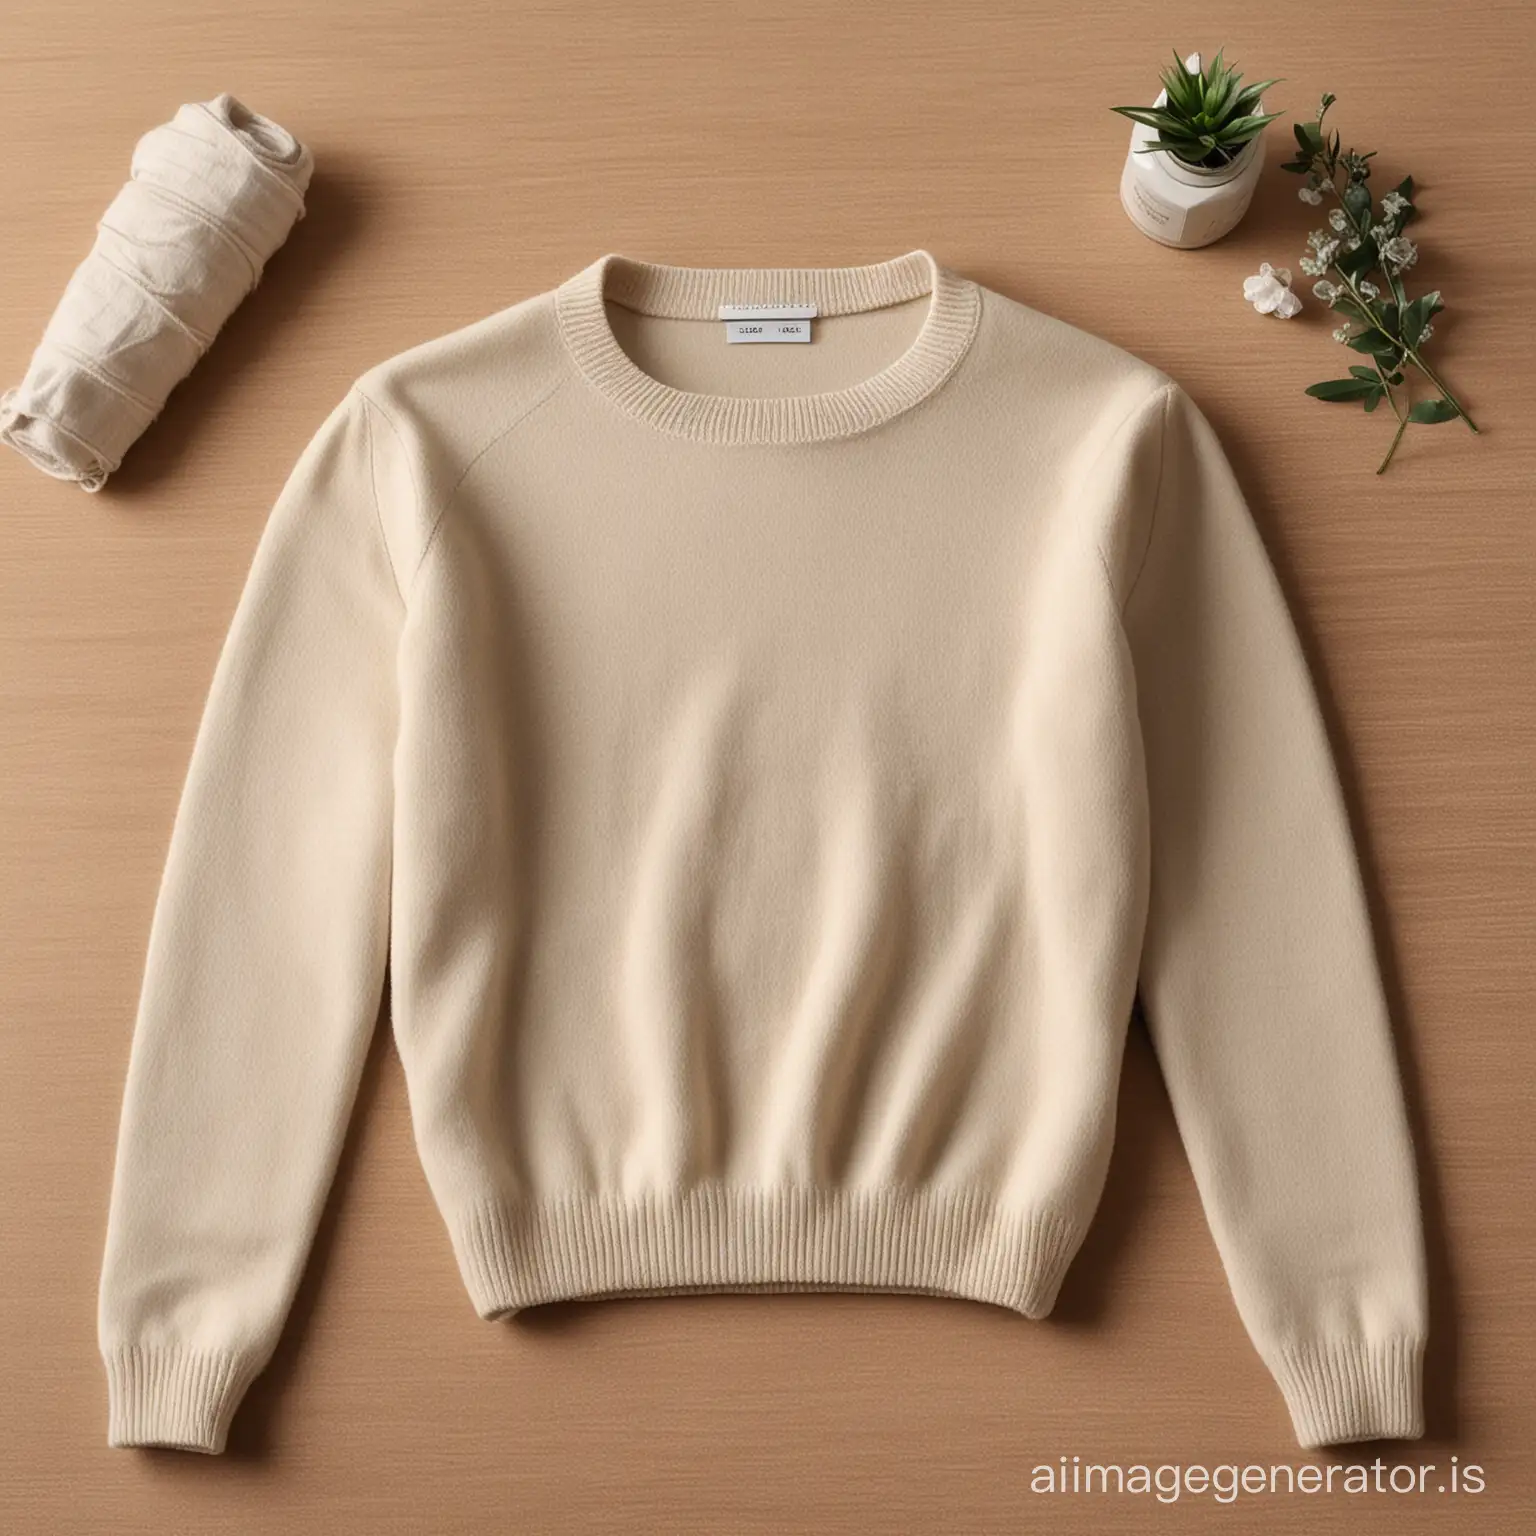 Cozy-Sweater-Sales-Advertisement-on-Display